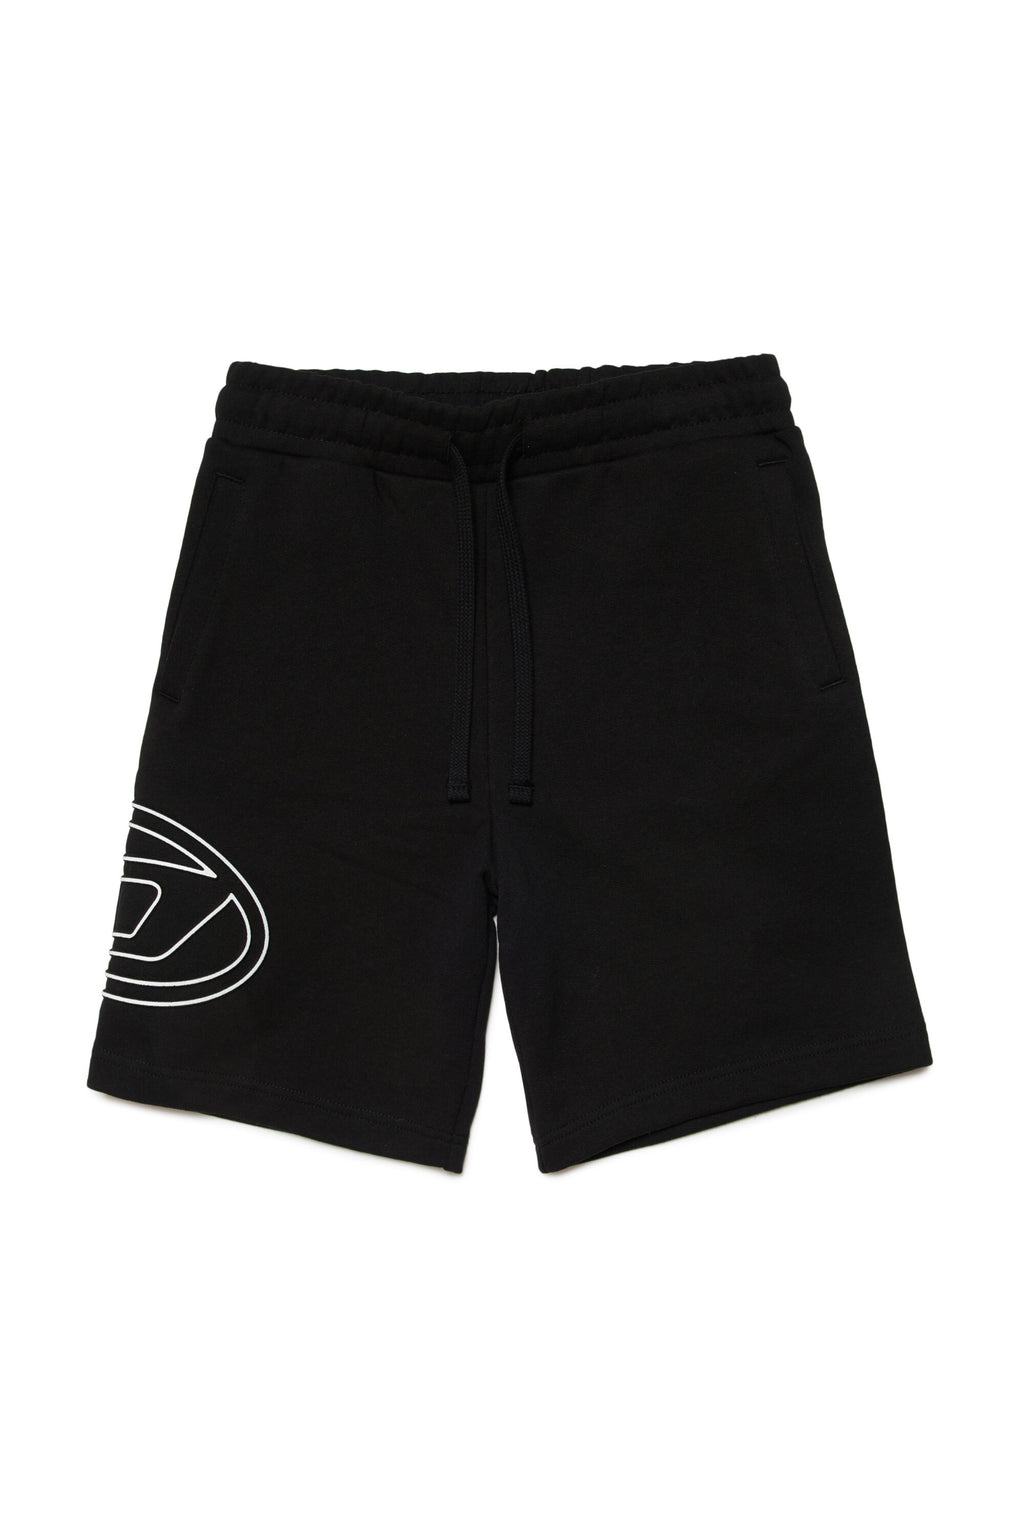 Fleece shorts with Oval D logo